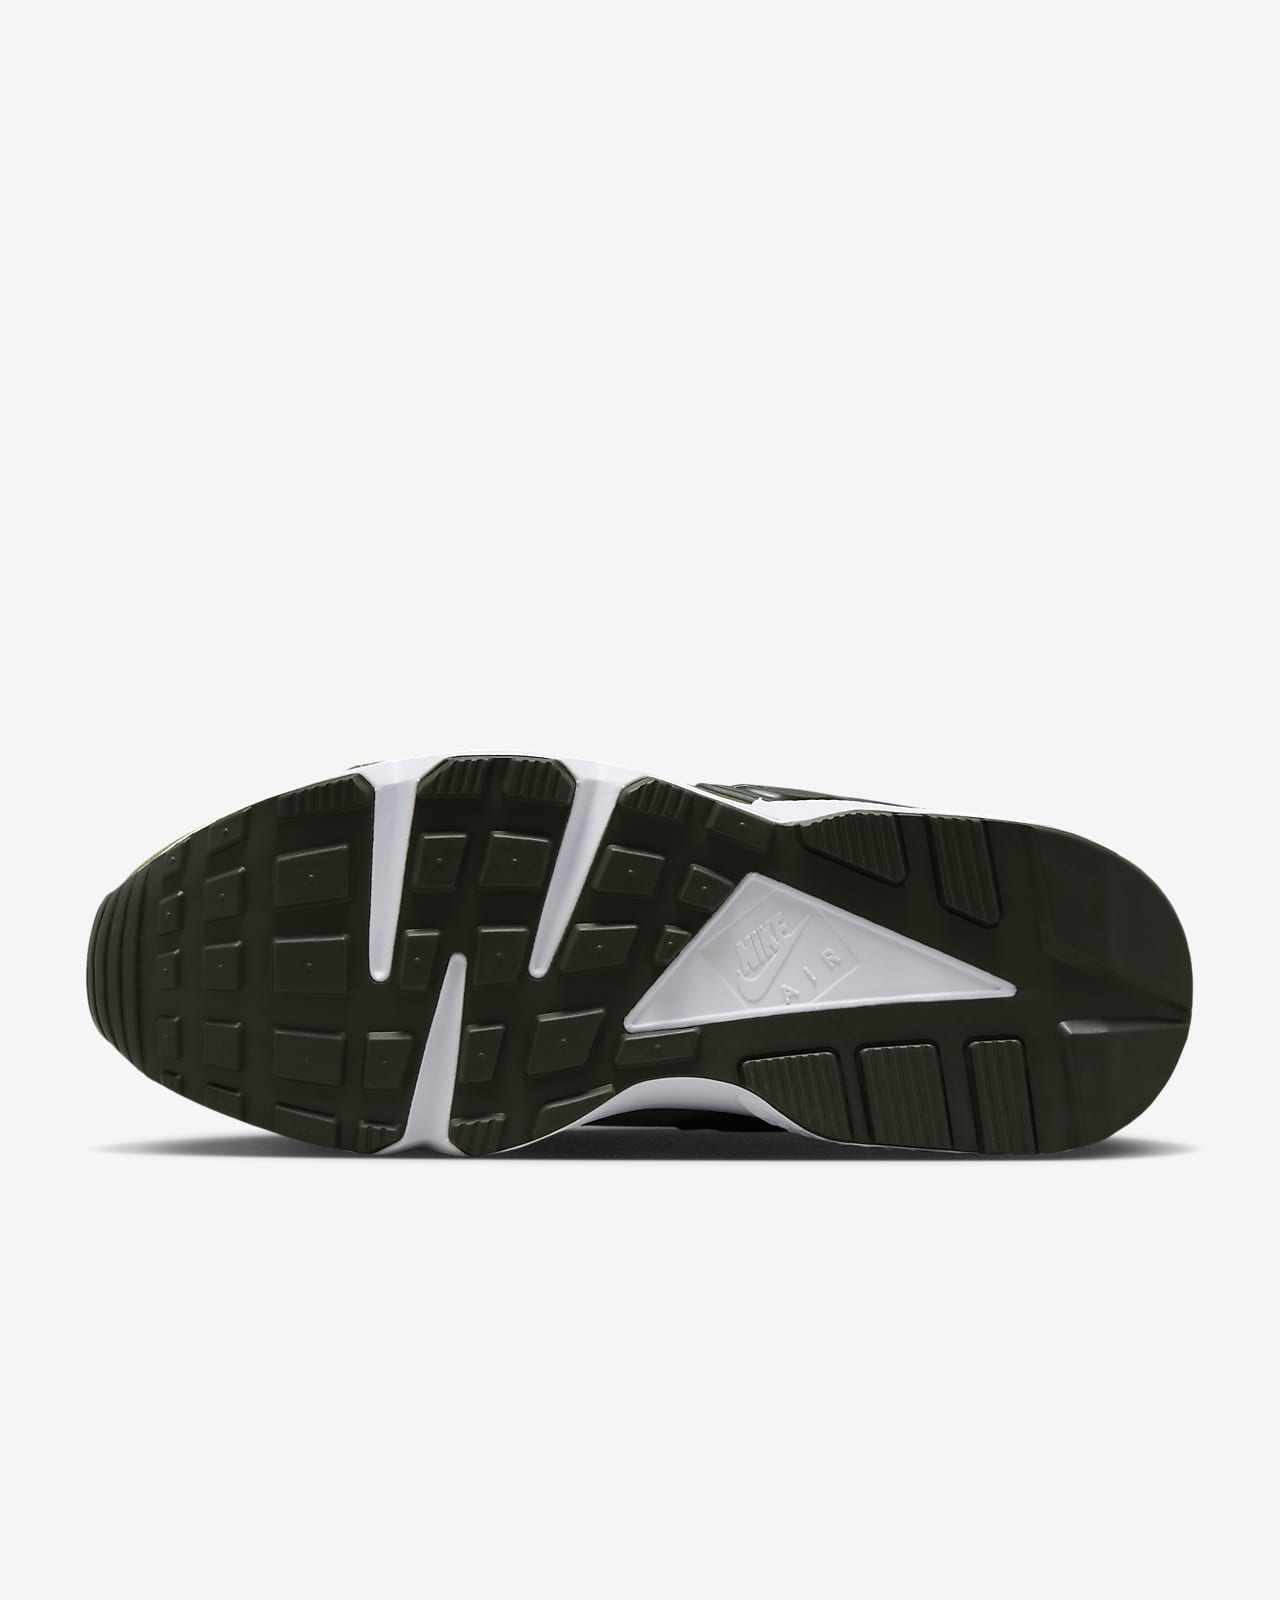 Nike Air Max 95 Ultra Essential (Cargo Khaki/Black) - Sneaker Freaker